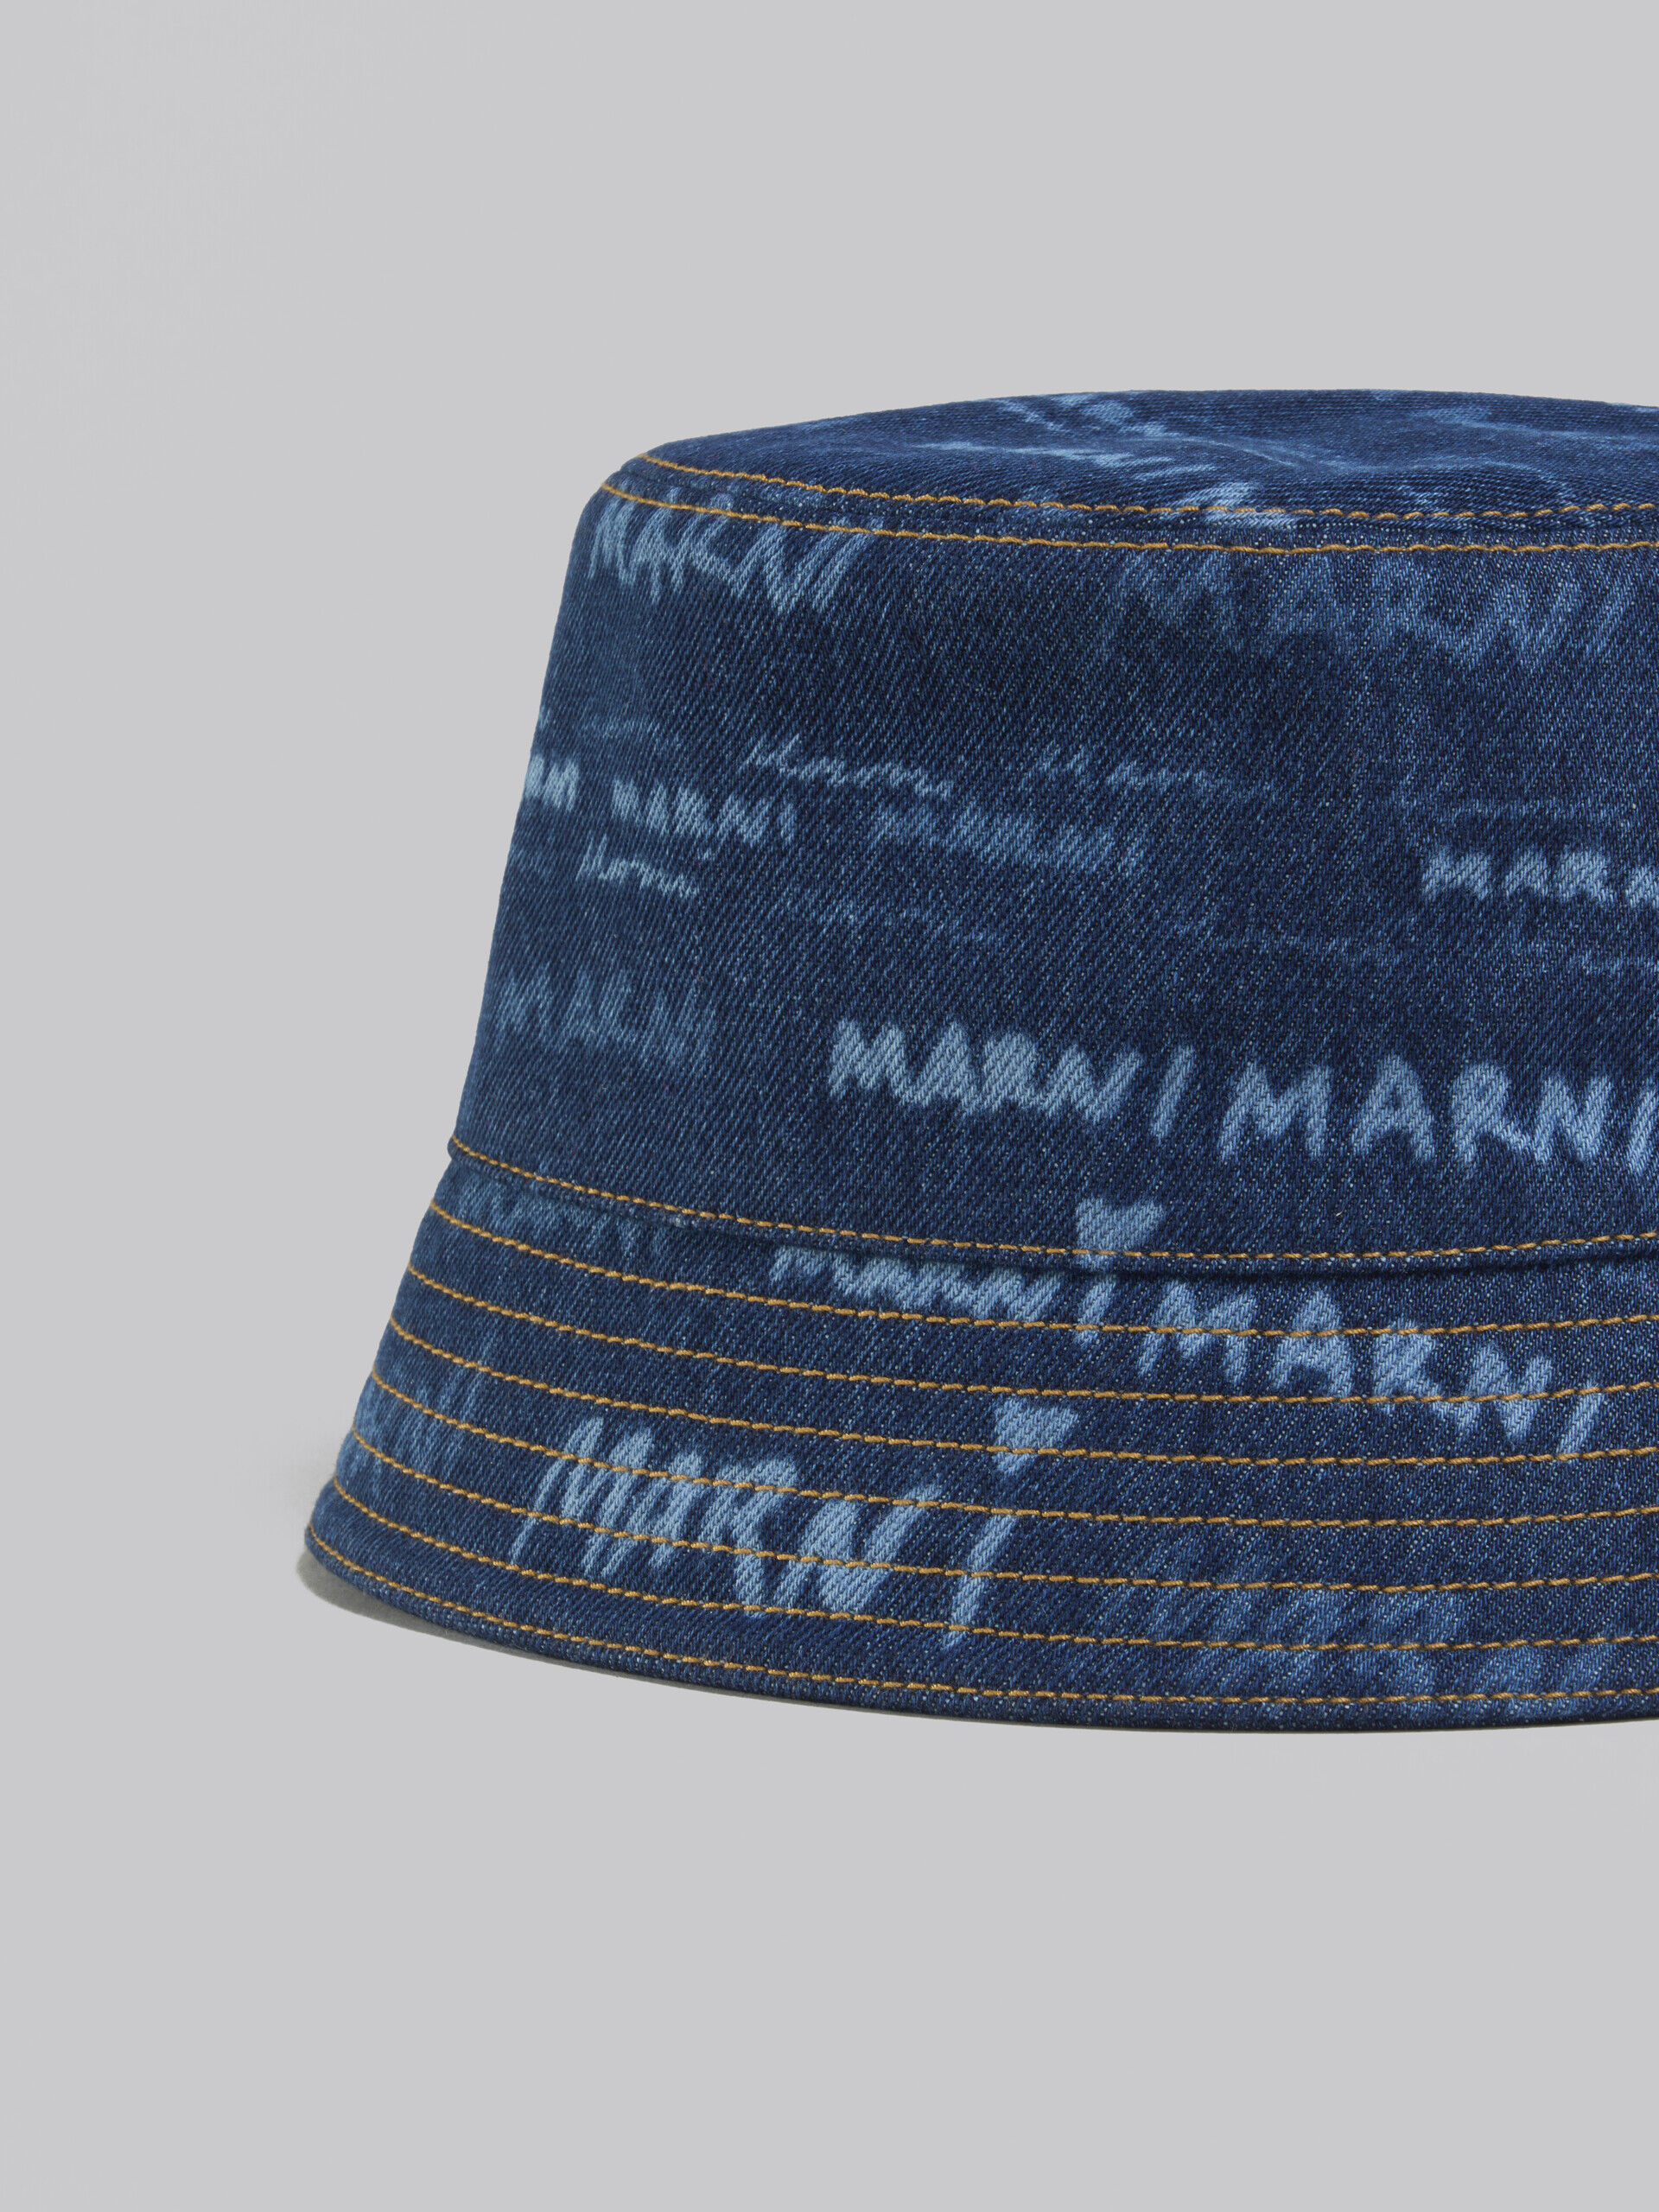 Blue denim bucket hat with Mega Marni motif | Marni